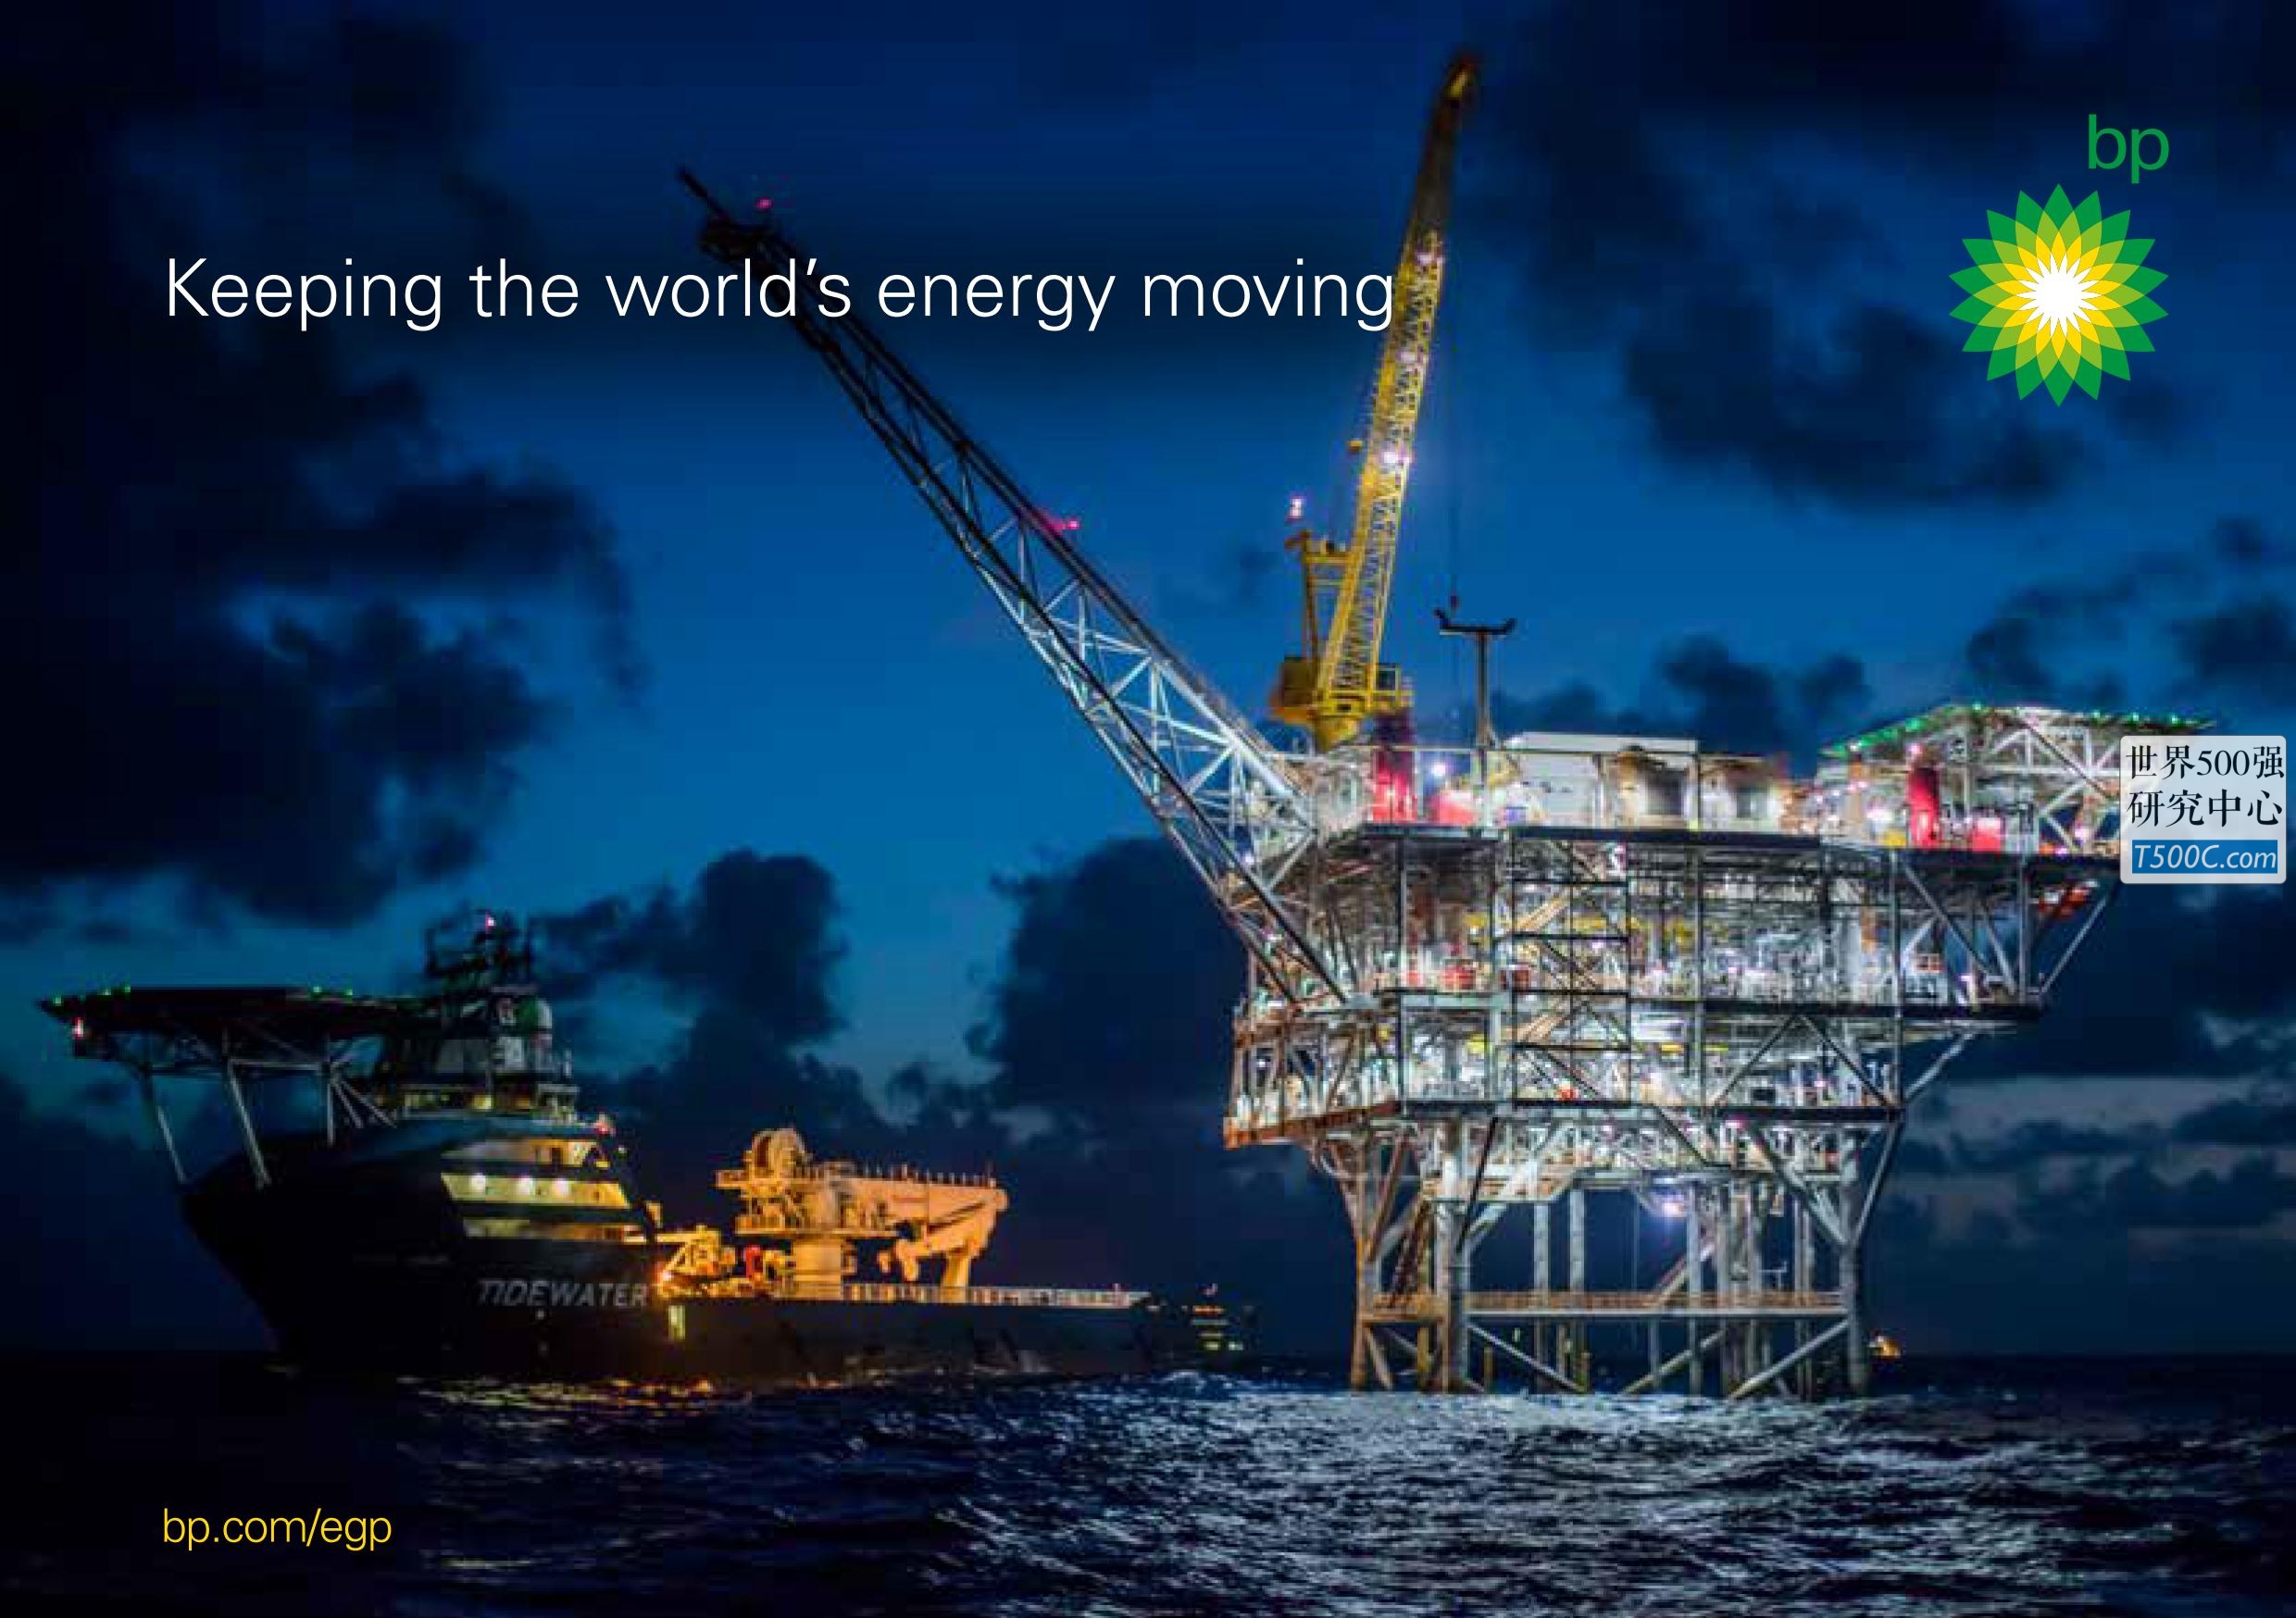 英国石油BP_见解宣传册Brochure_T500C.com_european-gas-and-power 2019.pdf